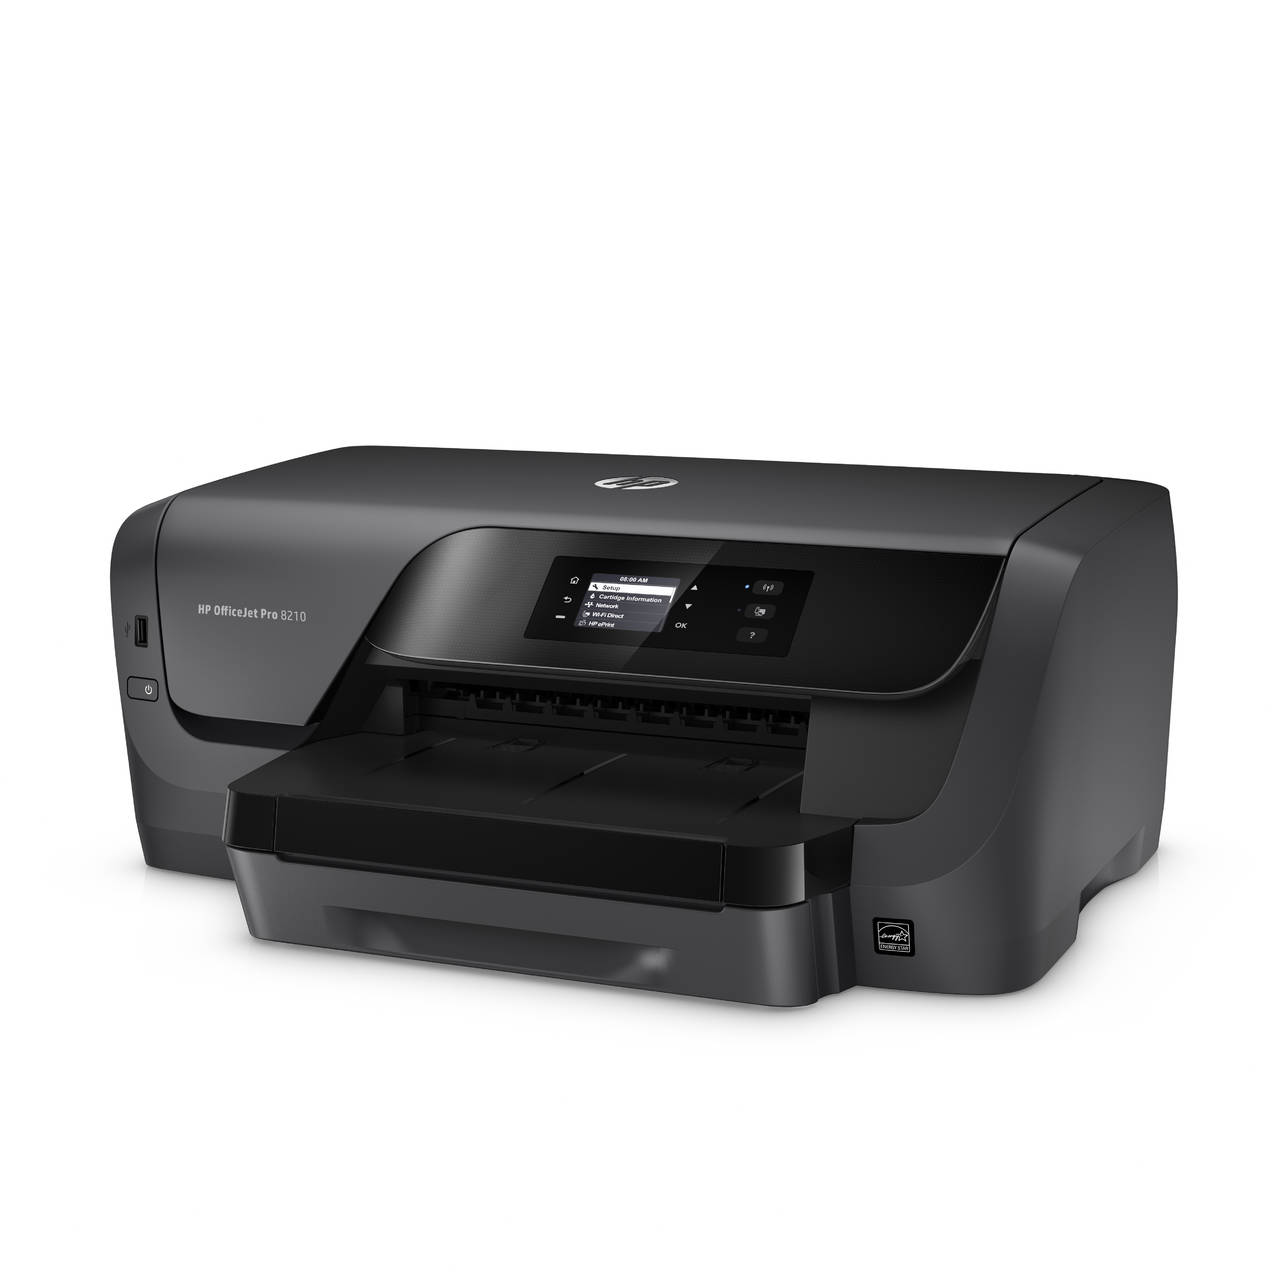 2-HP OfficeJet Pro 8210 Printer